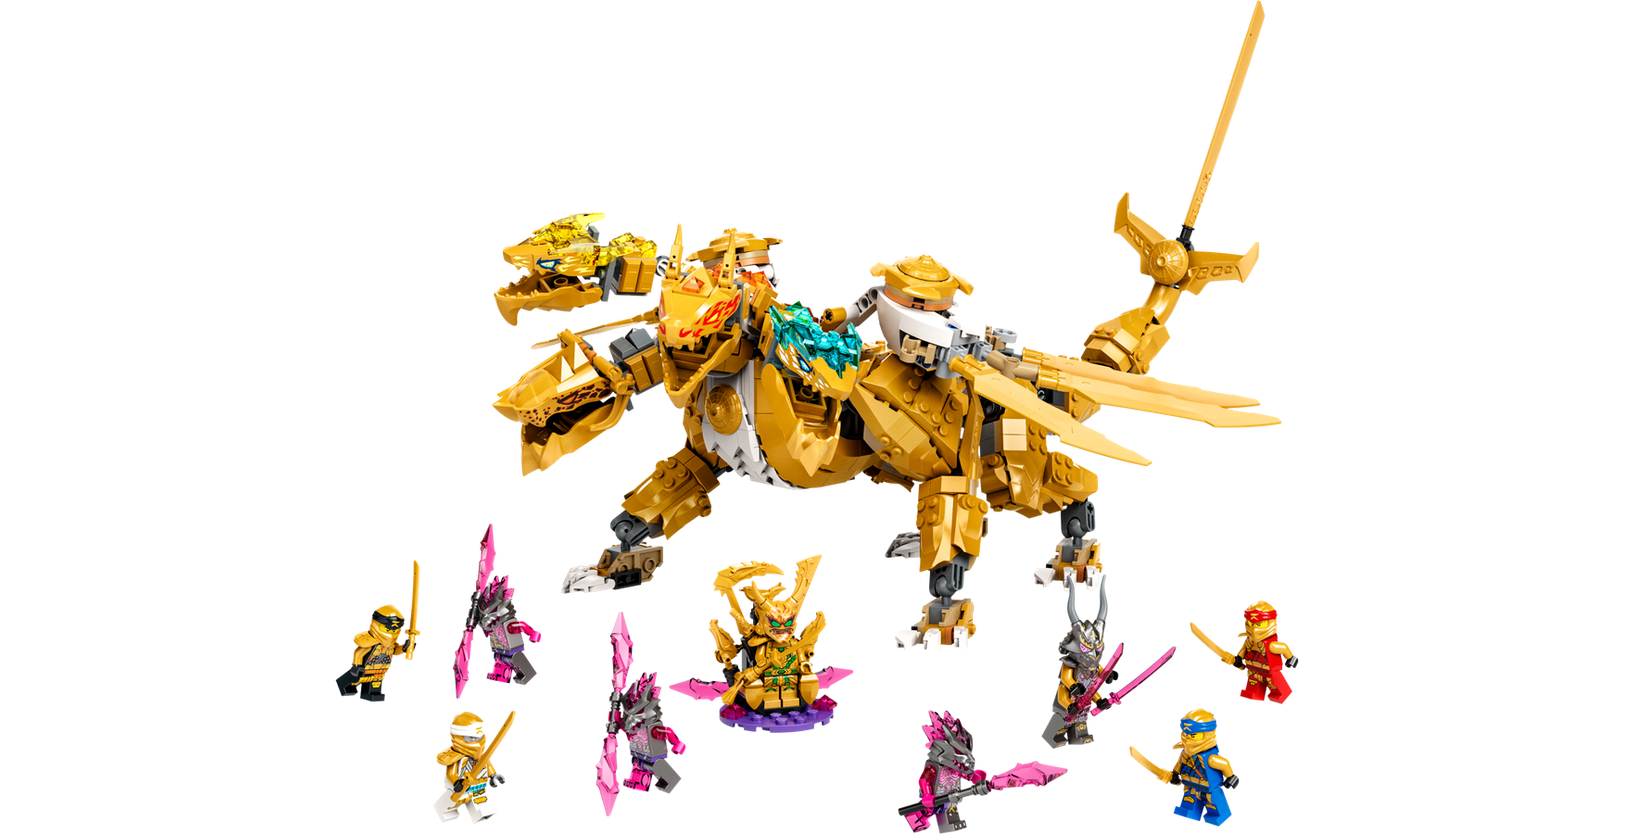 Lego Lego 71774 Ninjago - Le dragon d’or ultra de Lloyd